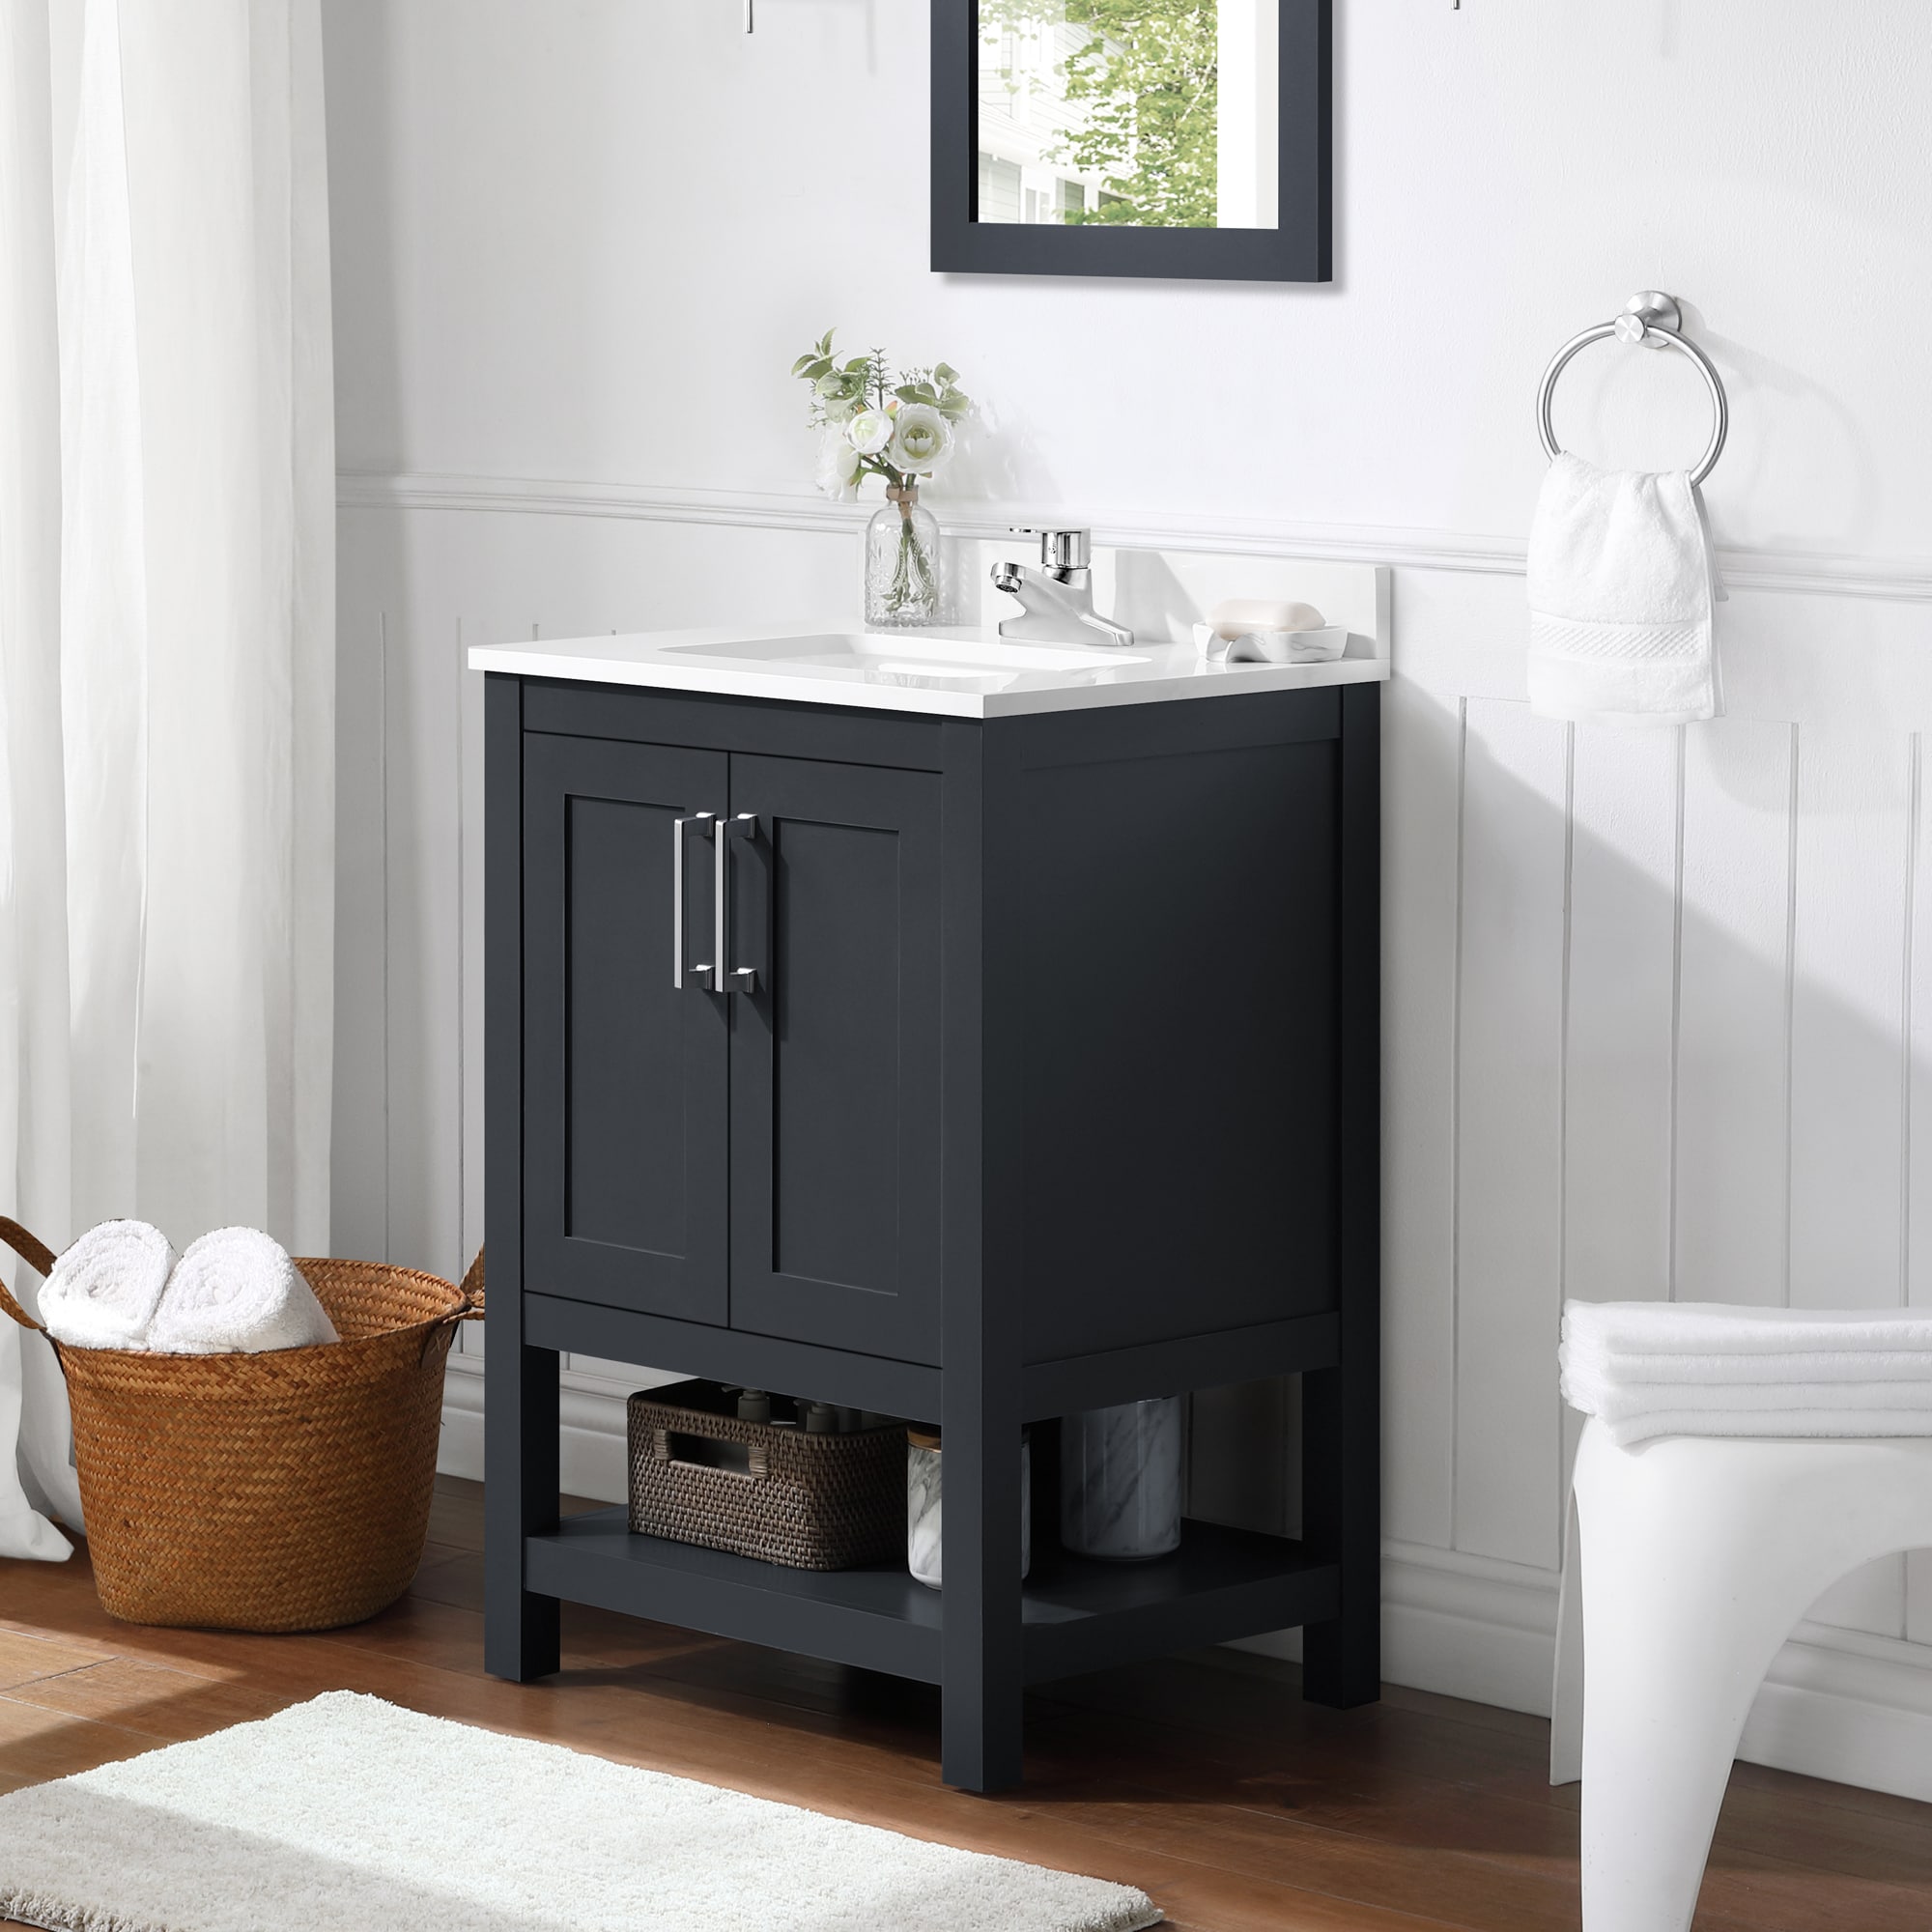 OVE Decors Albury 24-in Dark Charcoal Undermount Single Sink Bathroom ...